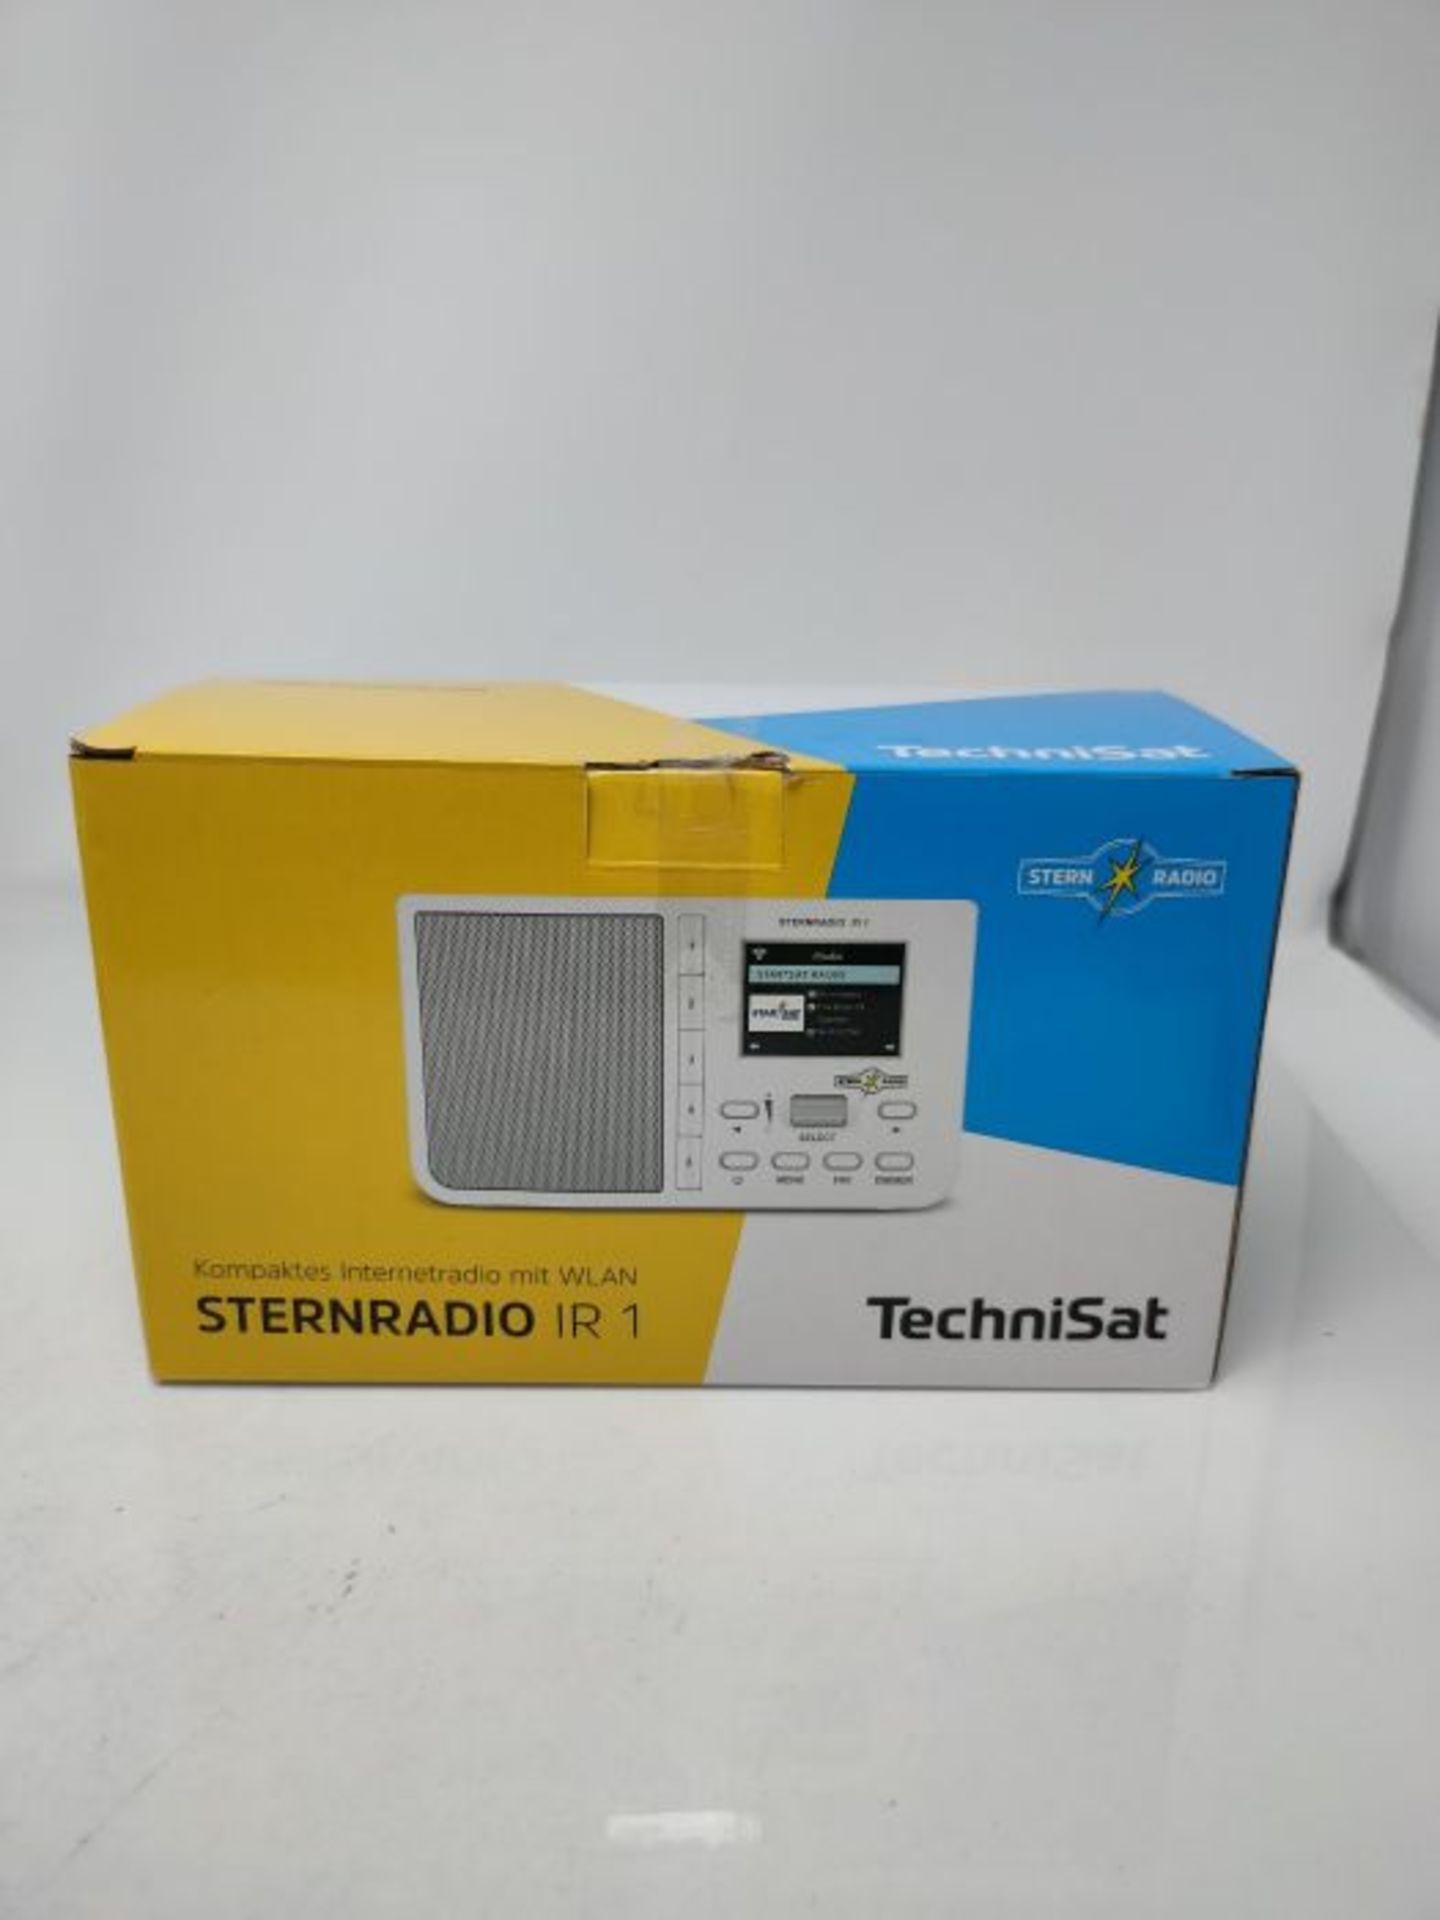 TechniSat STERNRADIO IR 1 - kompaktes Internetradio (WLAN, Farbdisplay, Weck- und Slee - Image 2 of 3